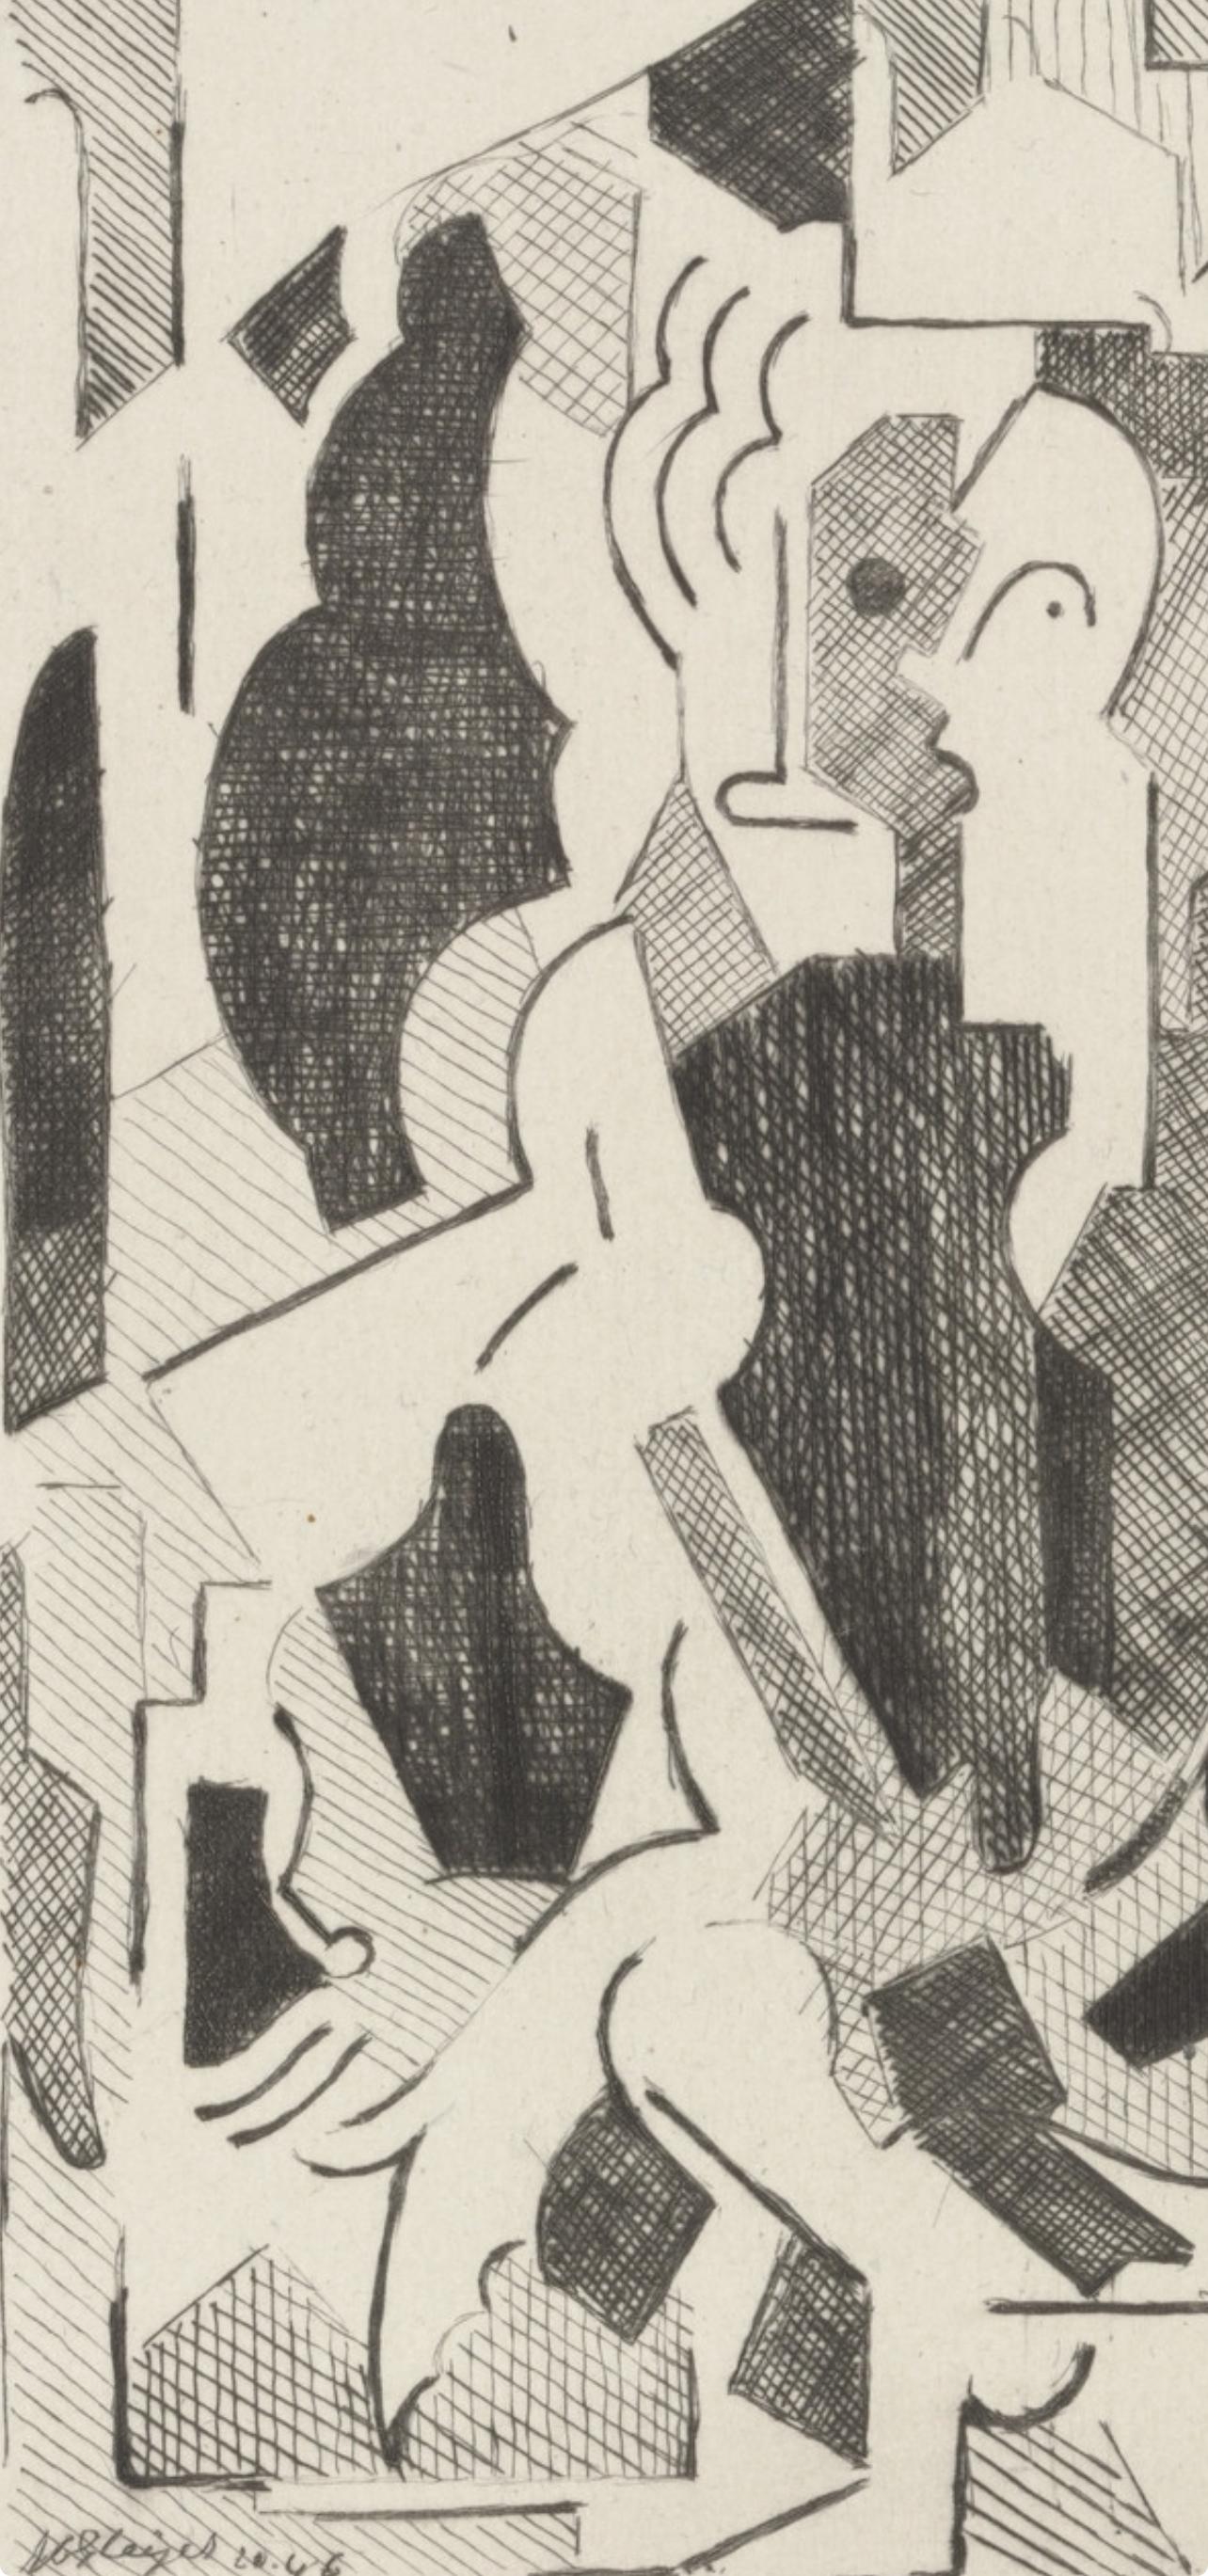 Gleizes, Composition, Du cubisme (after) - Print by Albert Gleizes